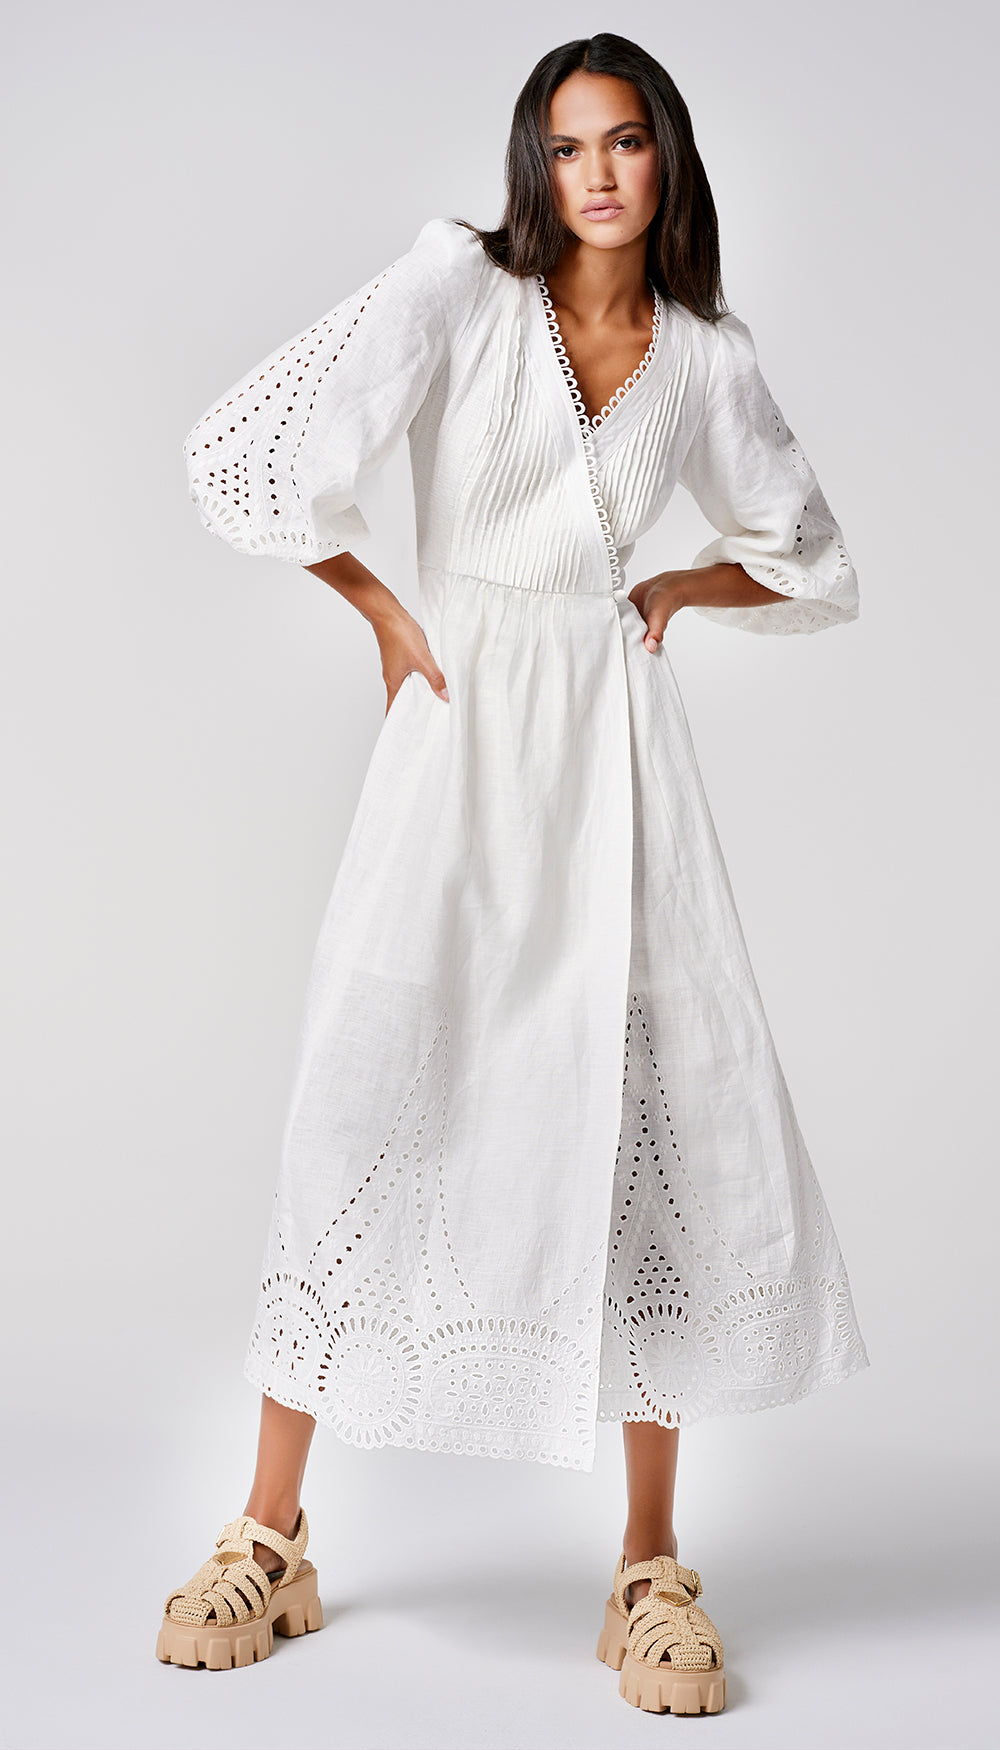 A woman in a white dress.